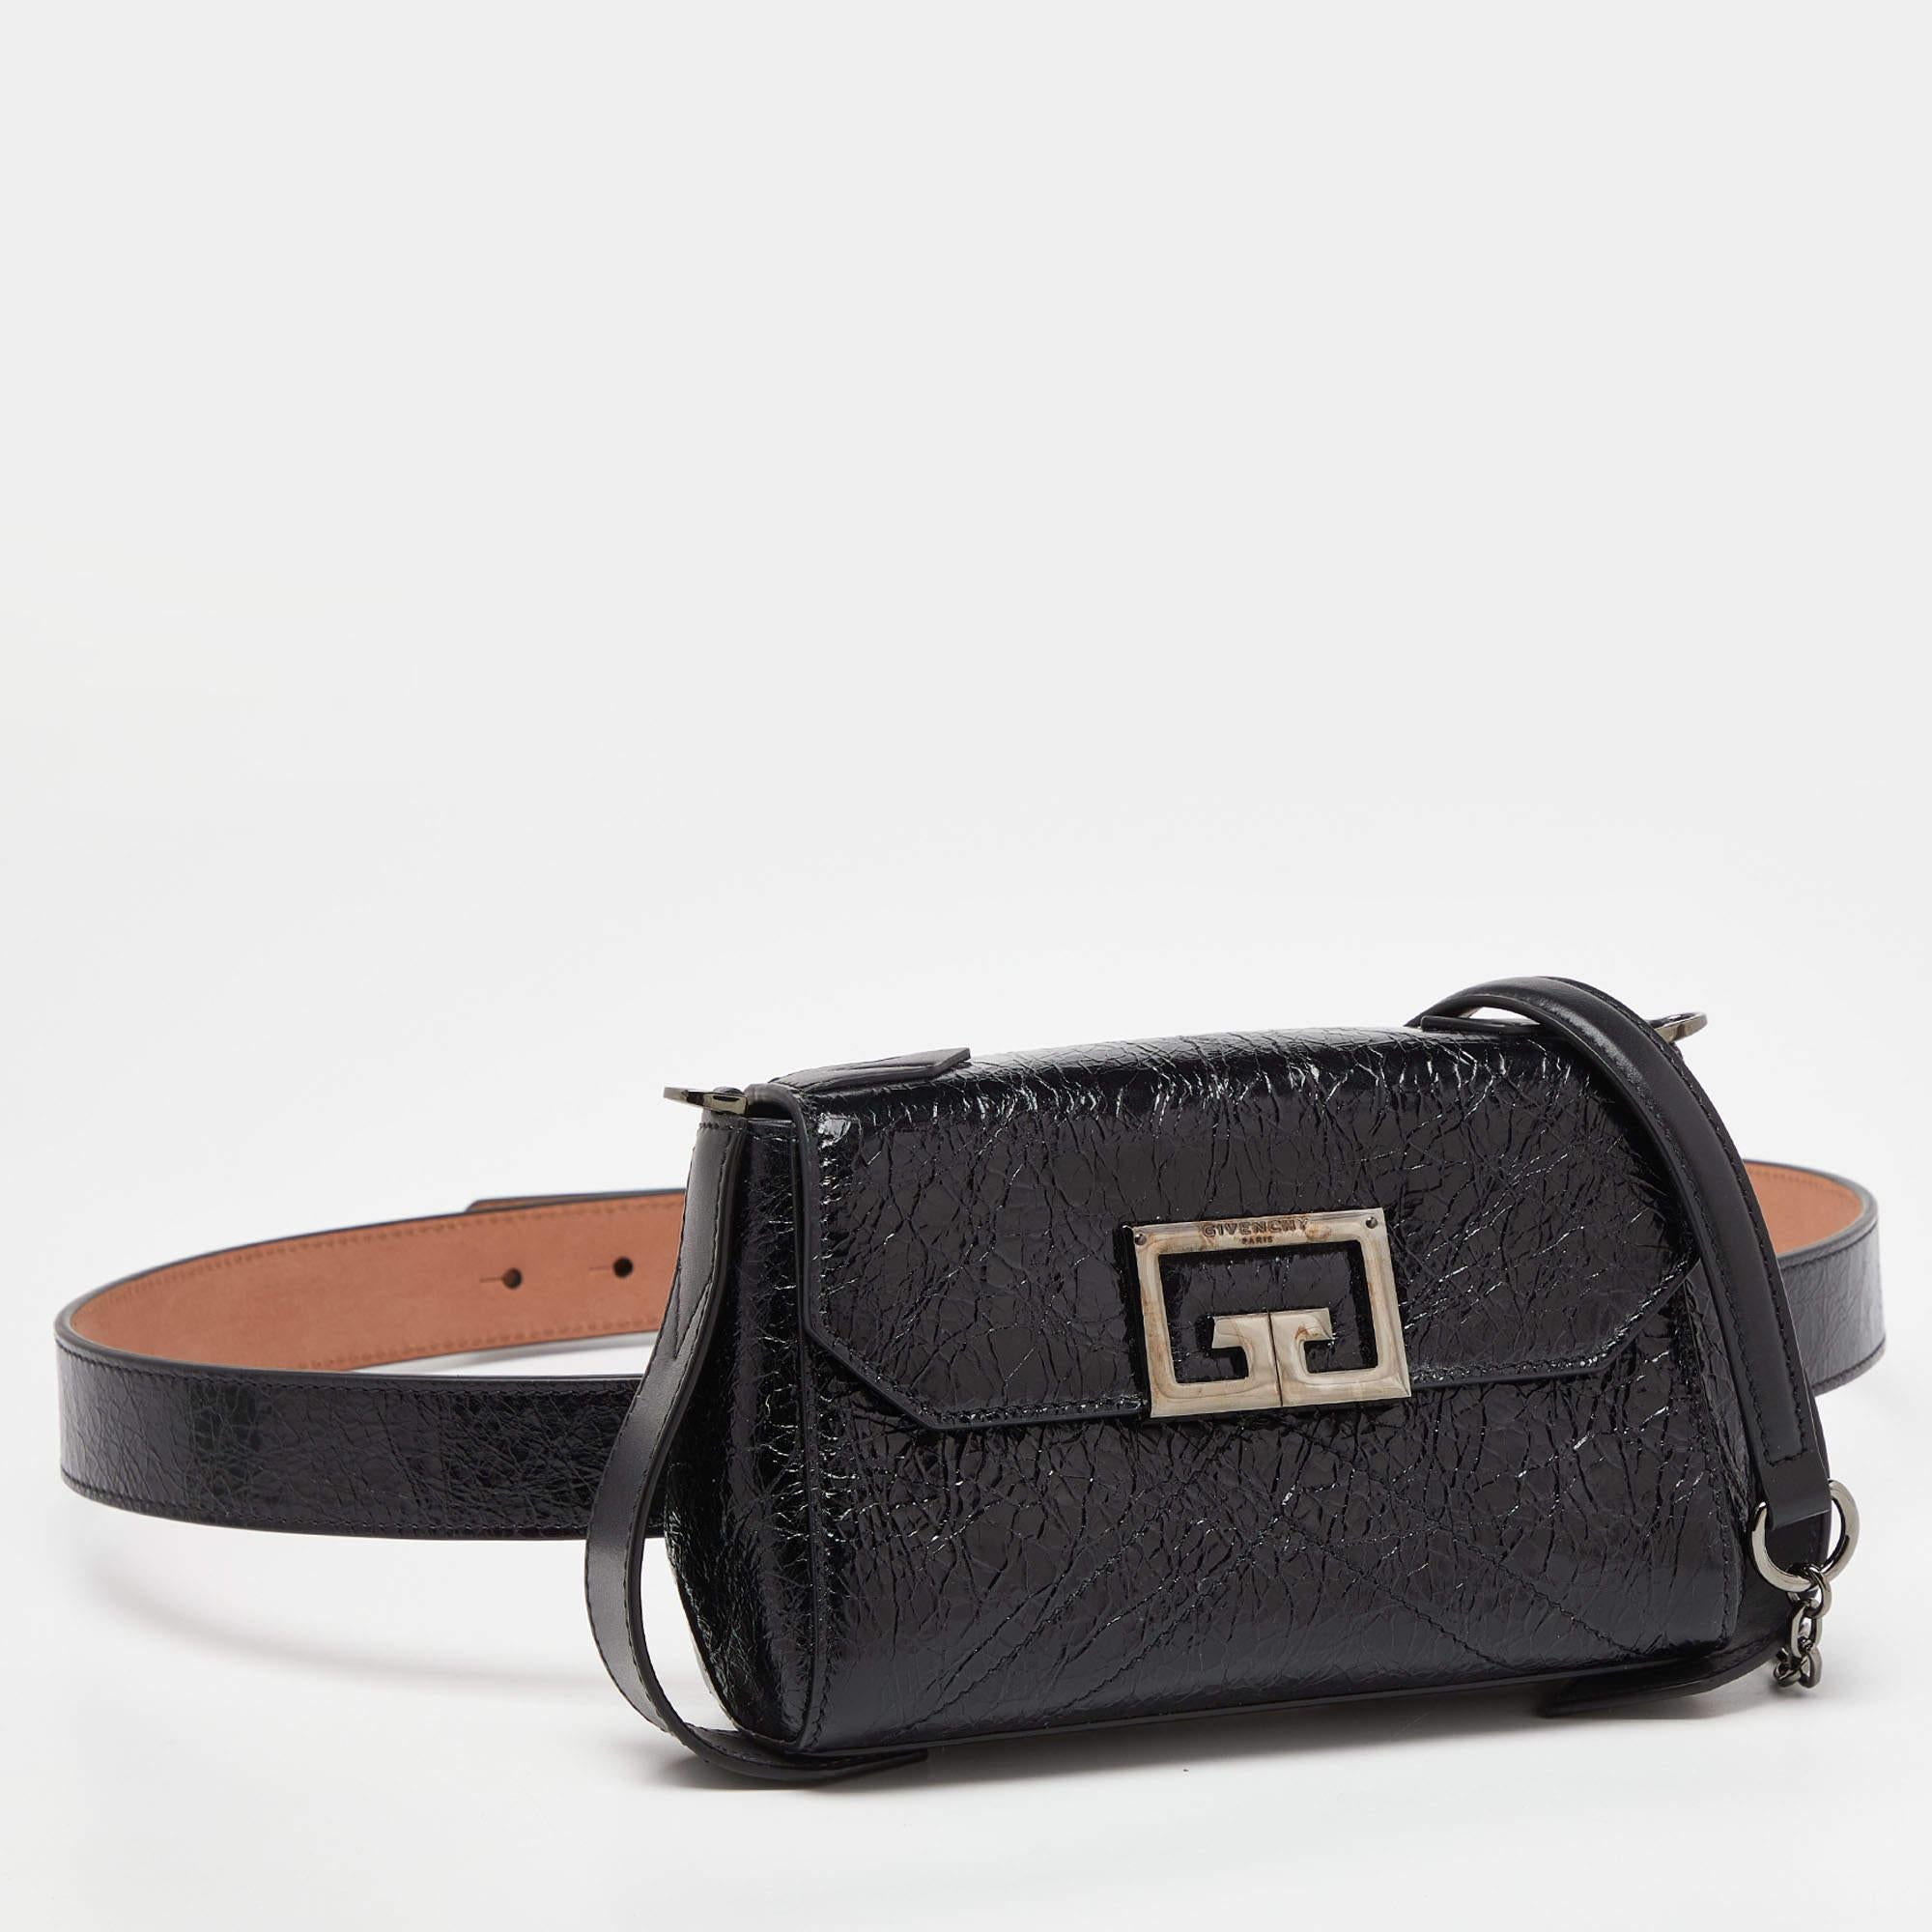 Givenchy Black Leather Belt Bag In Excellent Condition For Sale In Dubai, Al Qouz 2